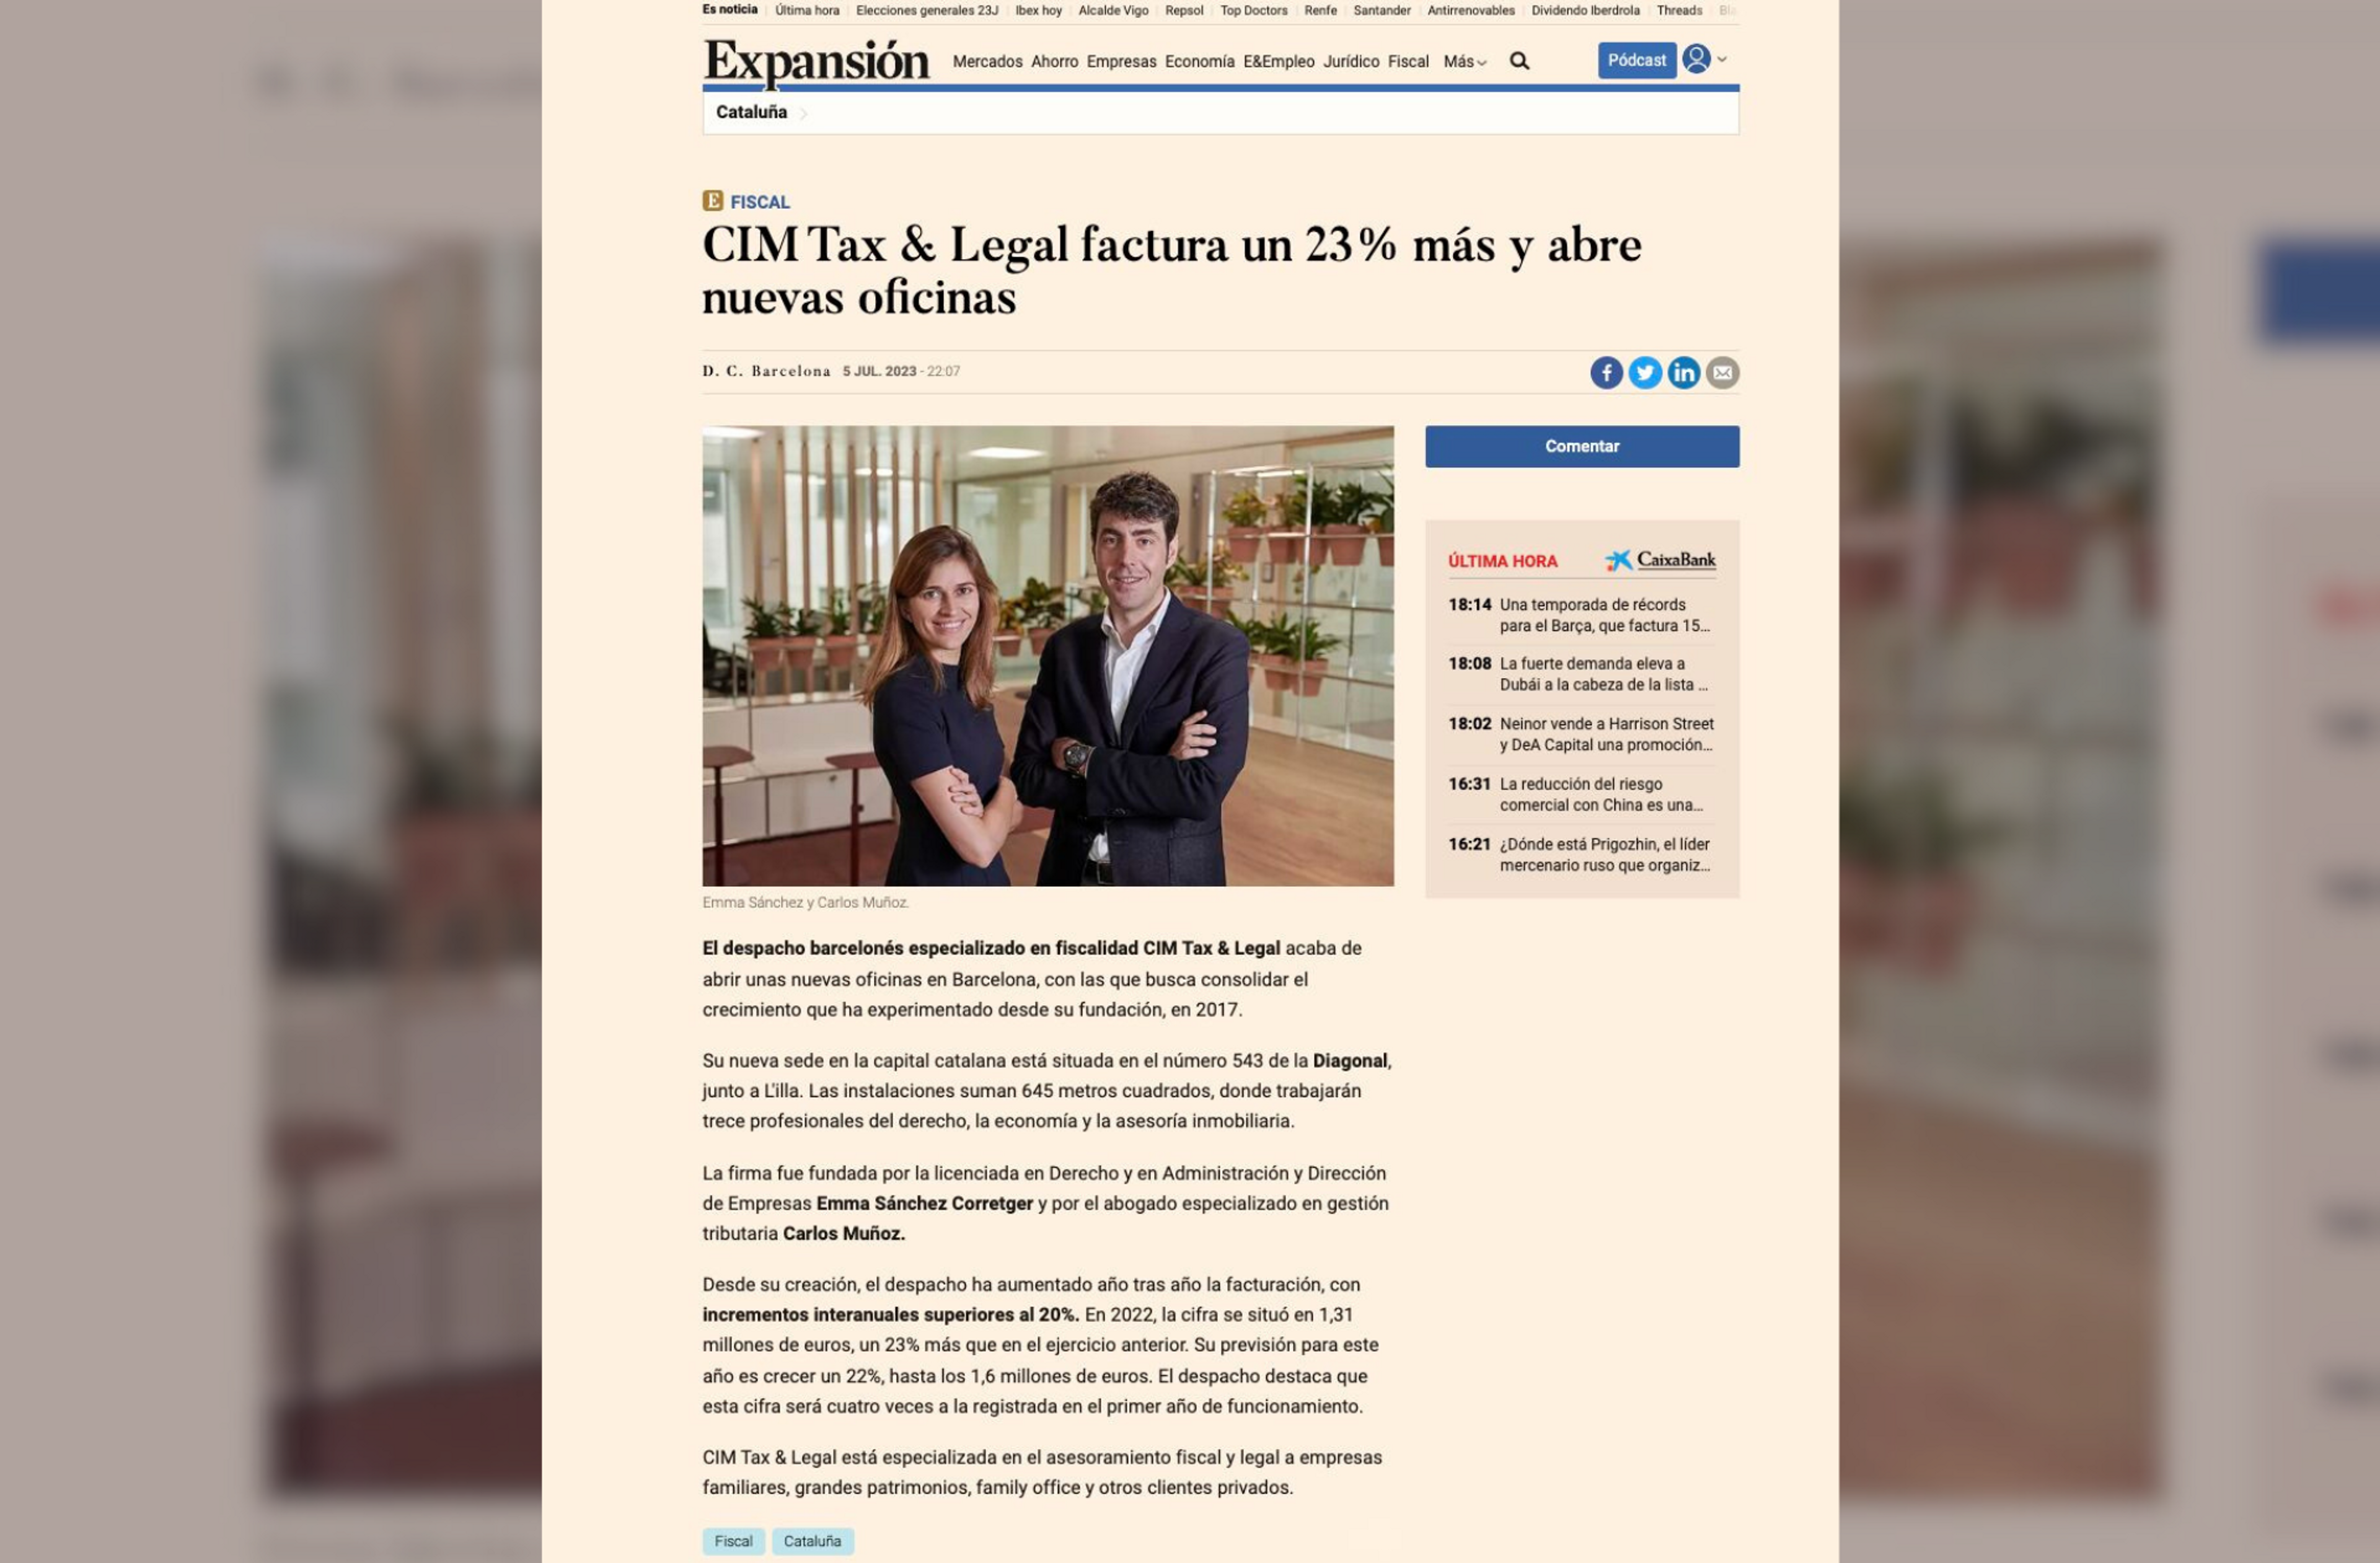 Cim tax & legal en Expansión